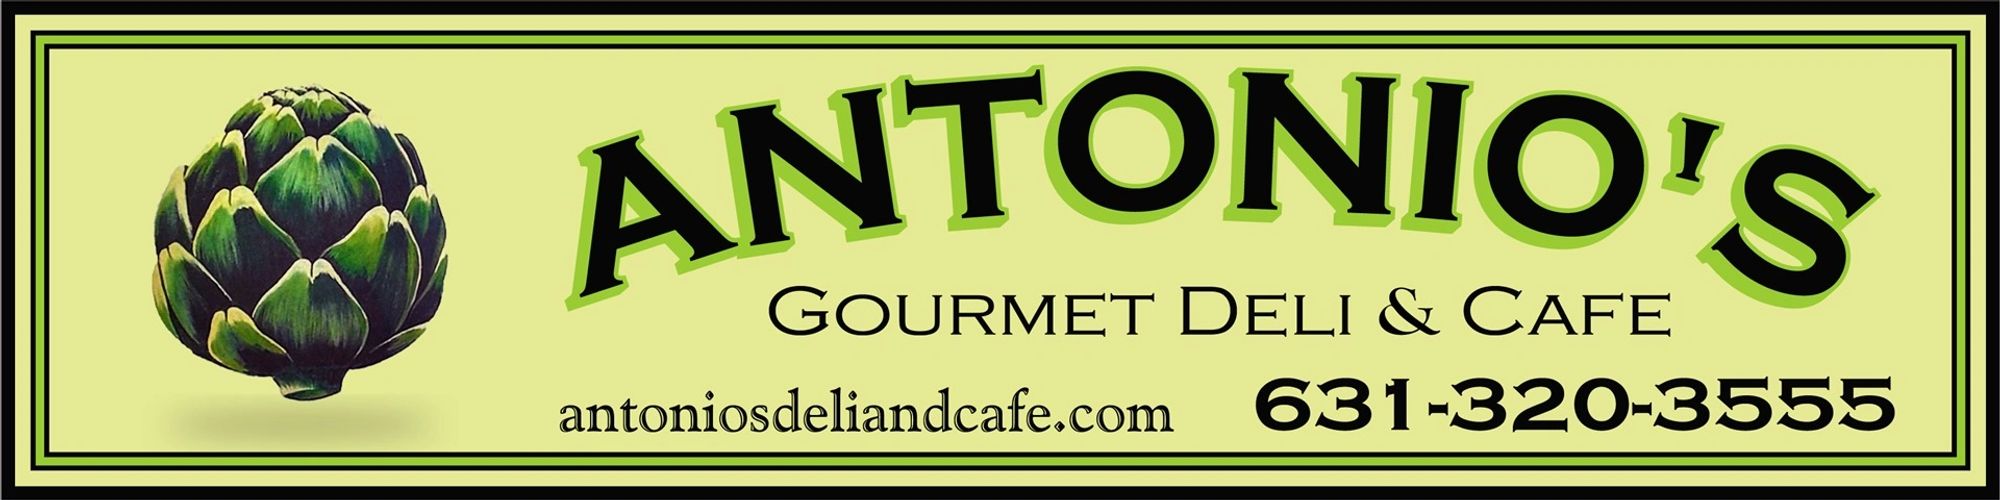 antoniosdeliandcafe.com, deli, food, lunch, breakfast, catering, food near me,  Medford, delivery